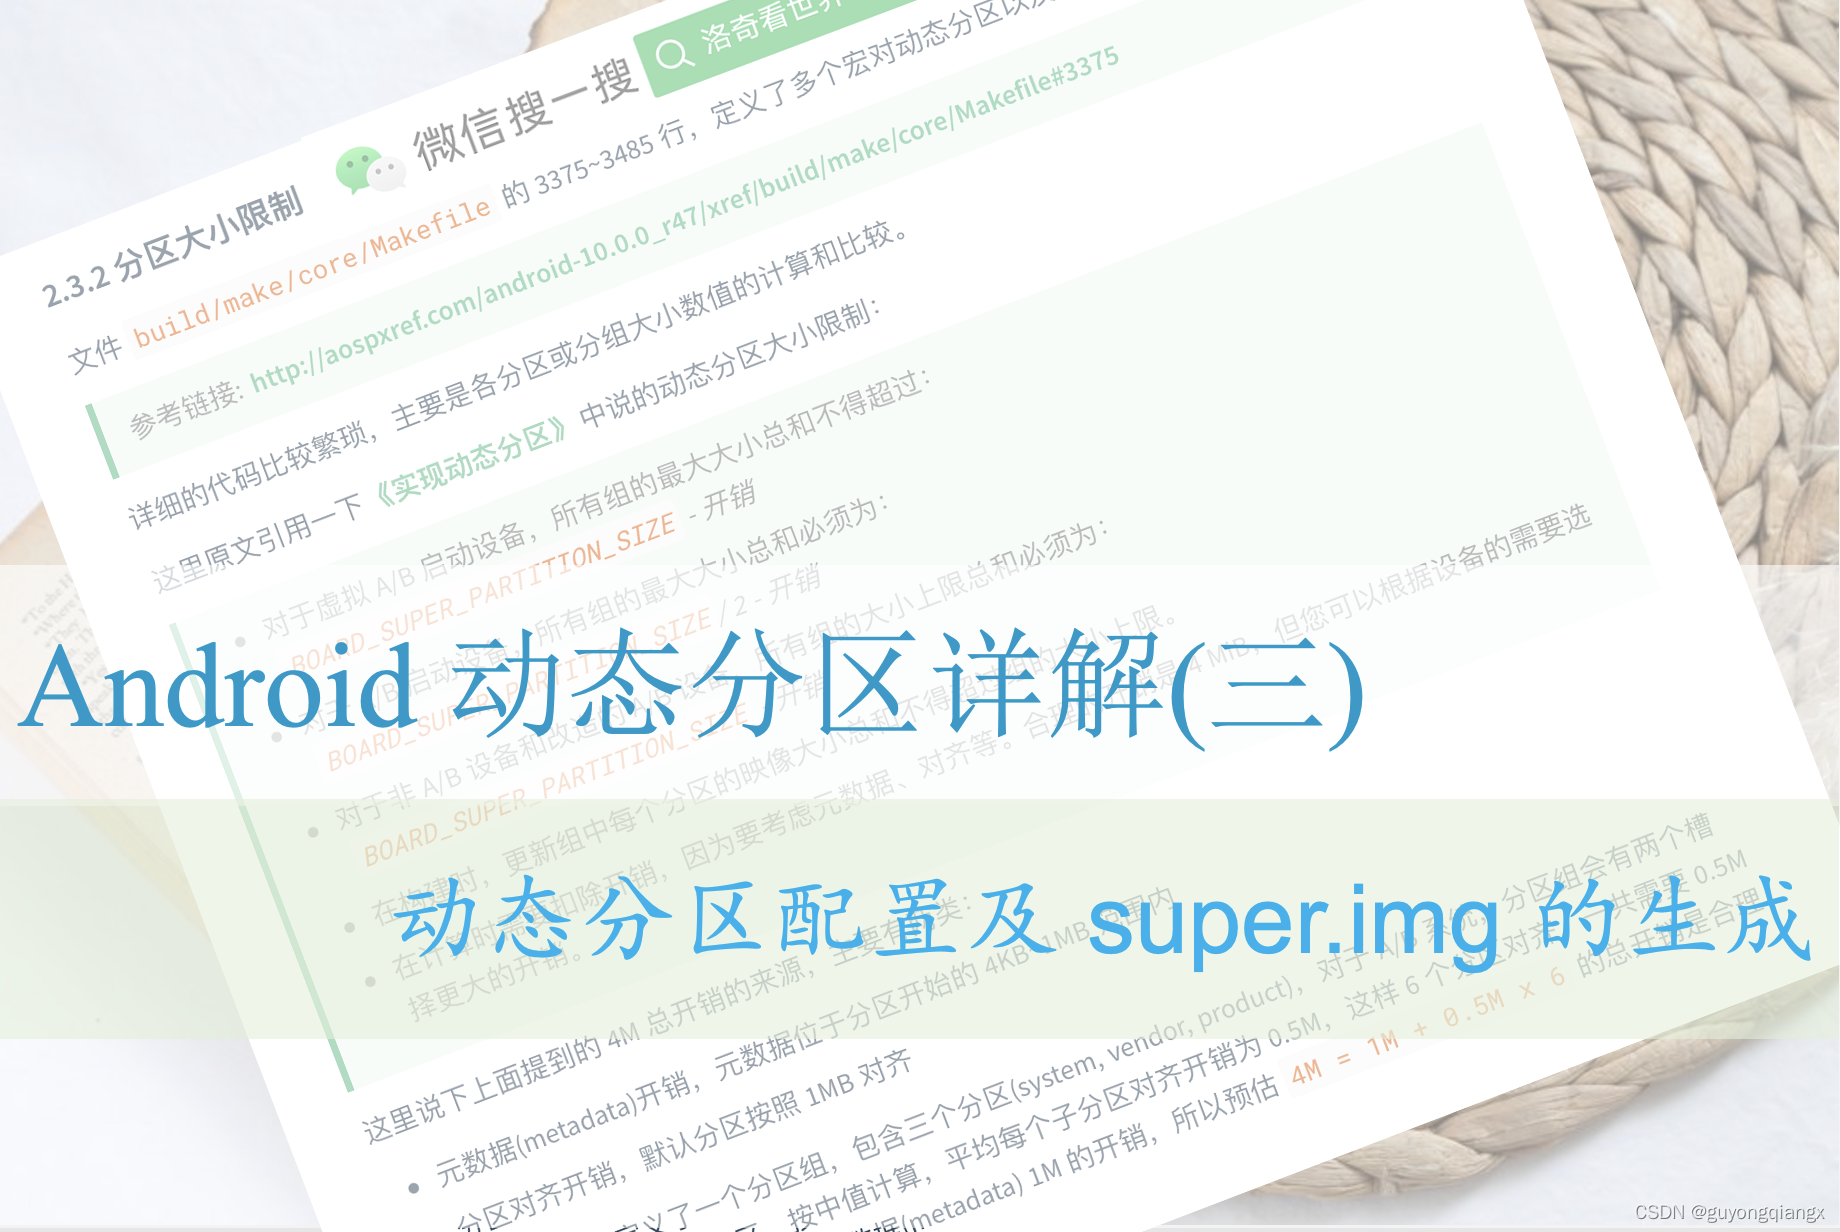 Android 动态分区详解(三) 动态分区配置及super.img的生成